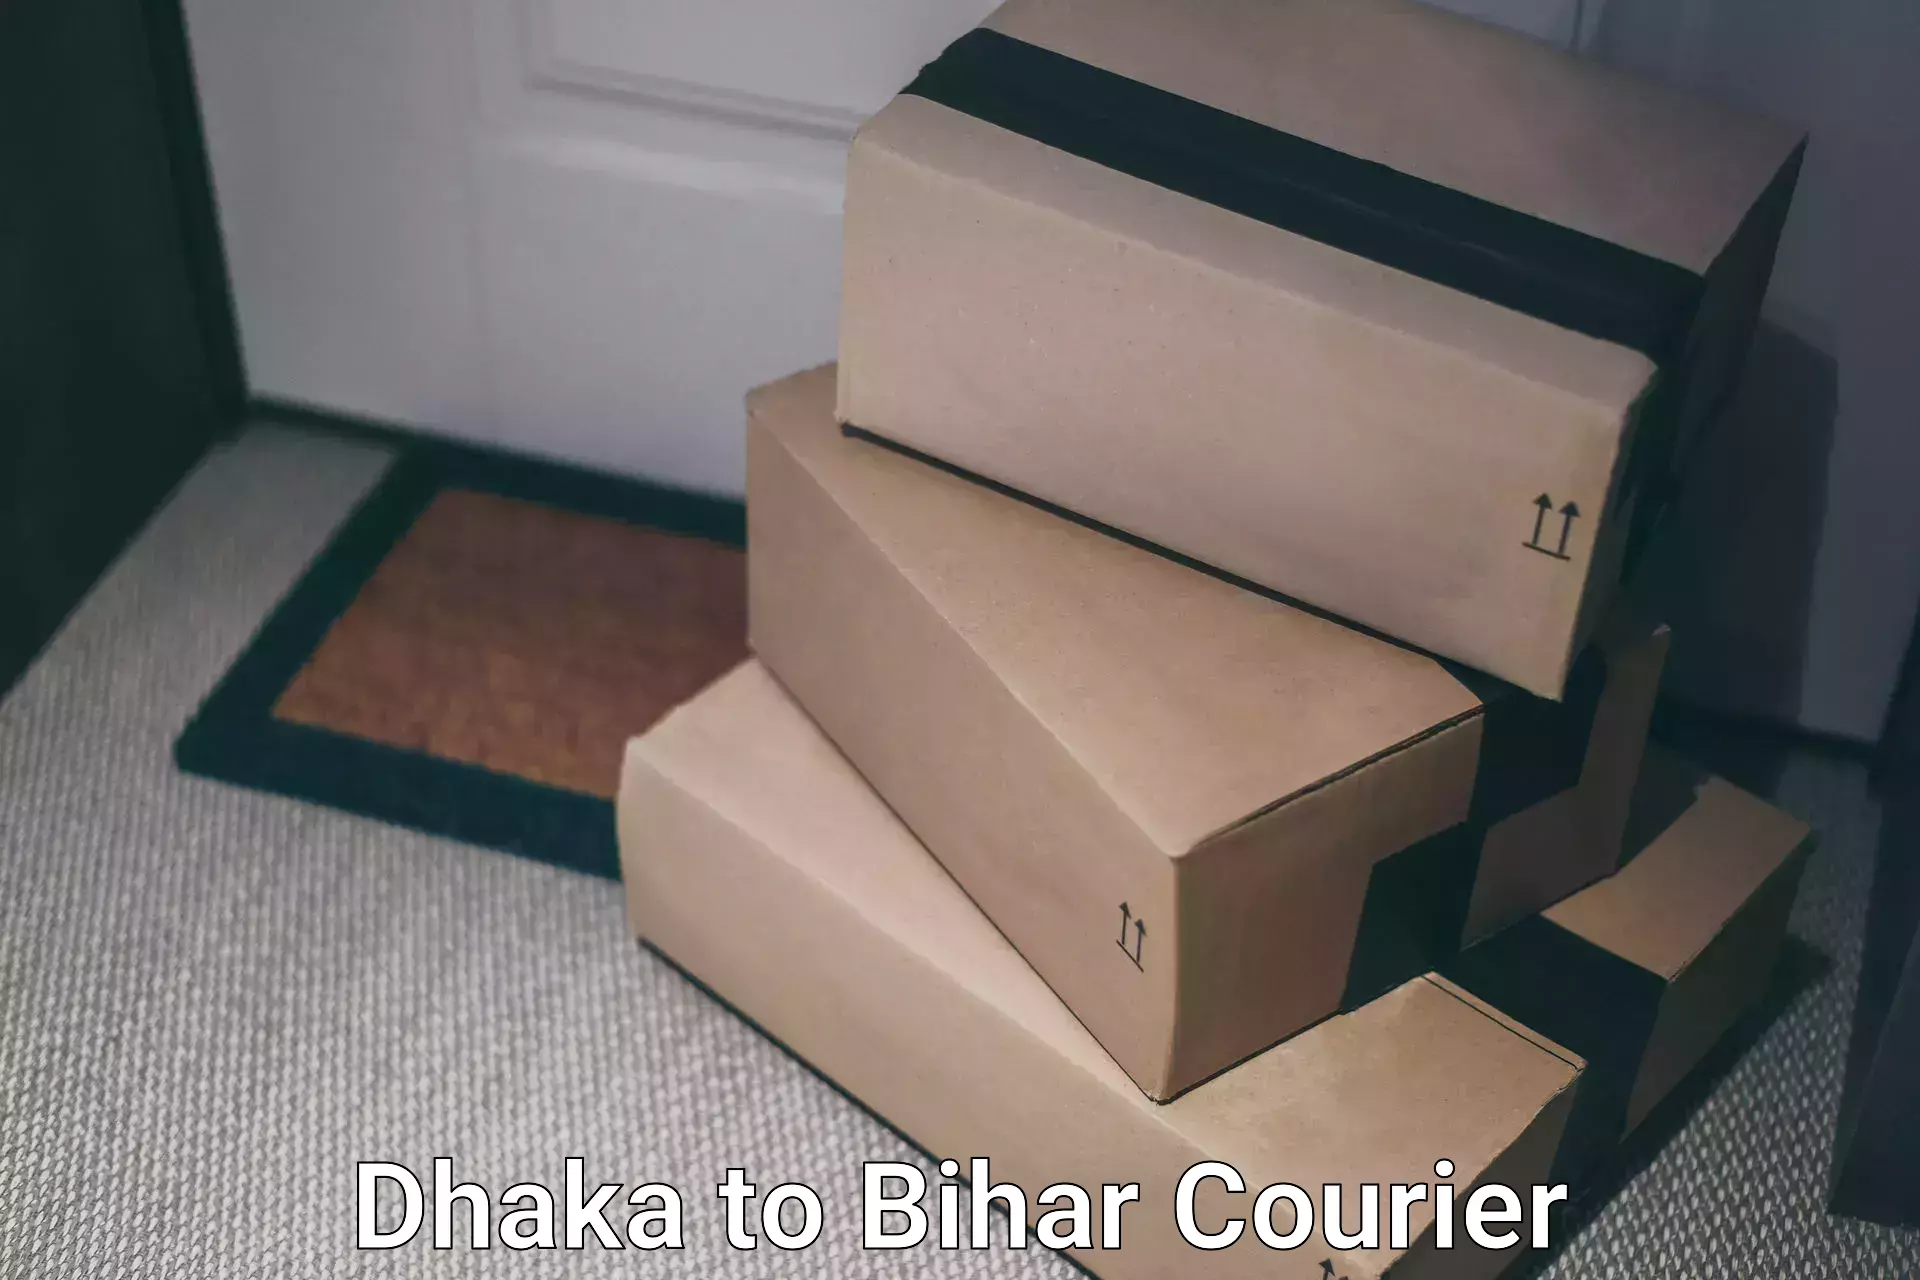 User-friendly courier app Dhaka to Bihar